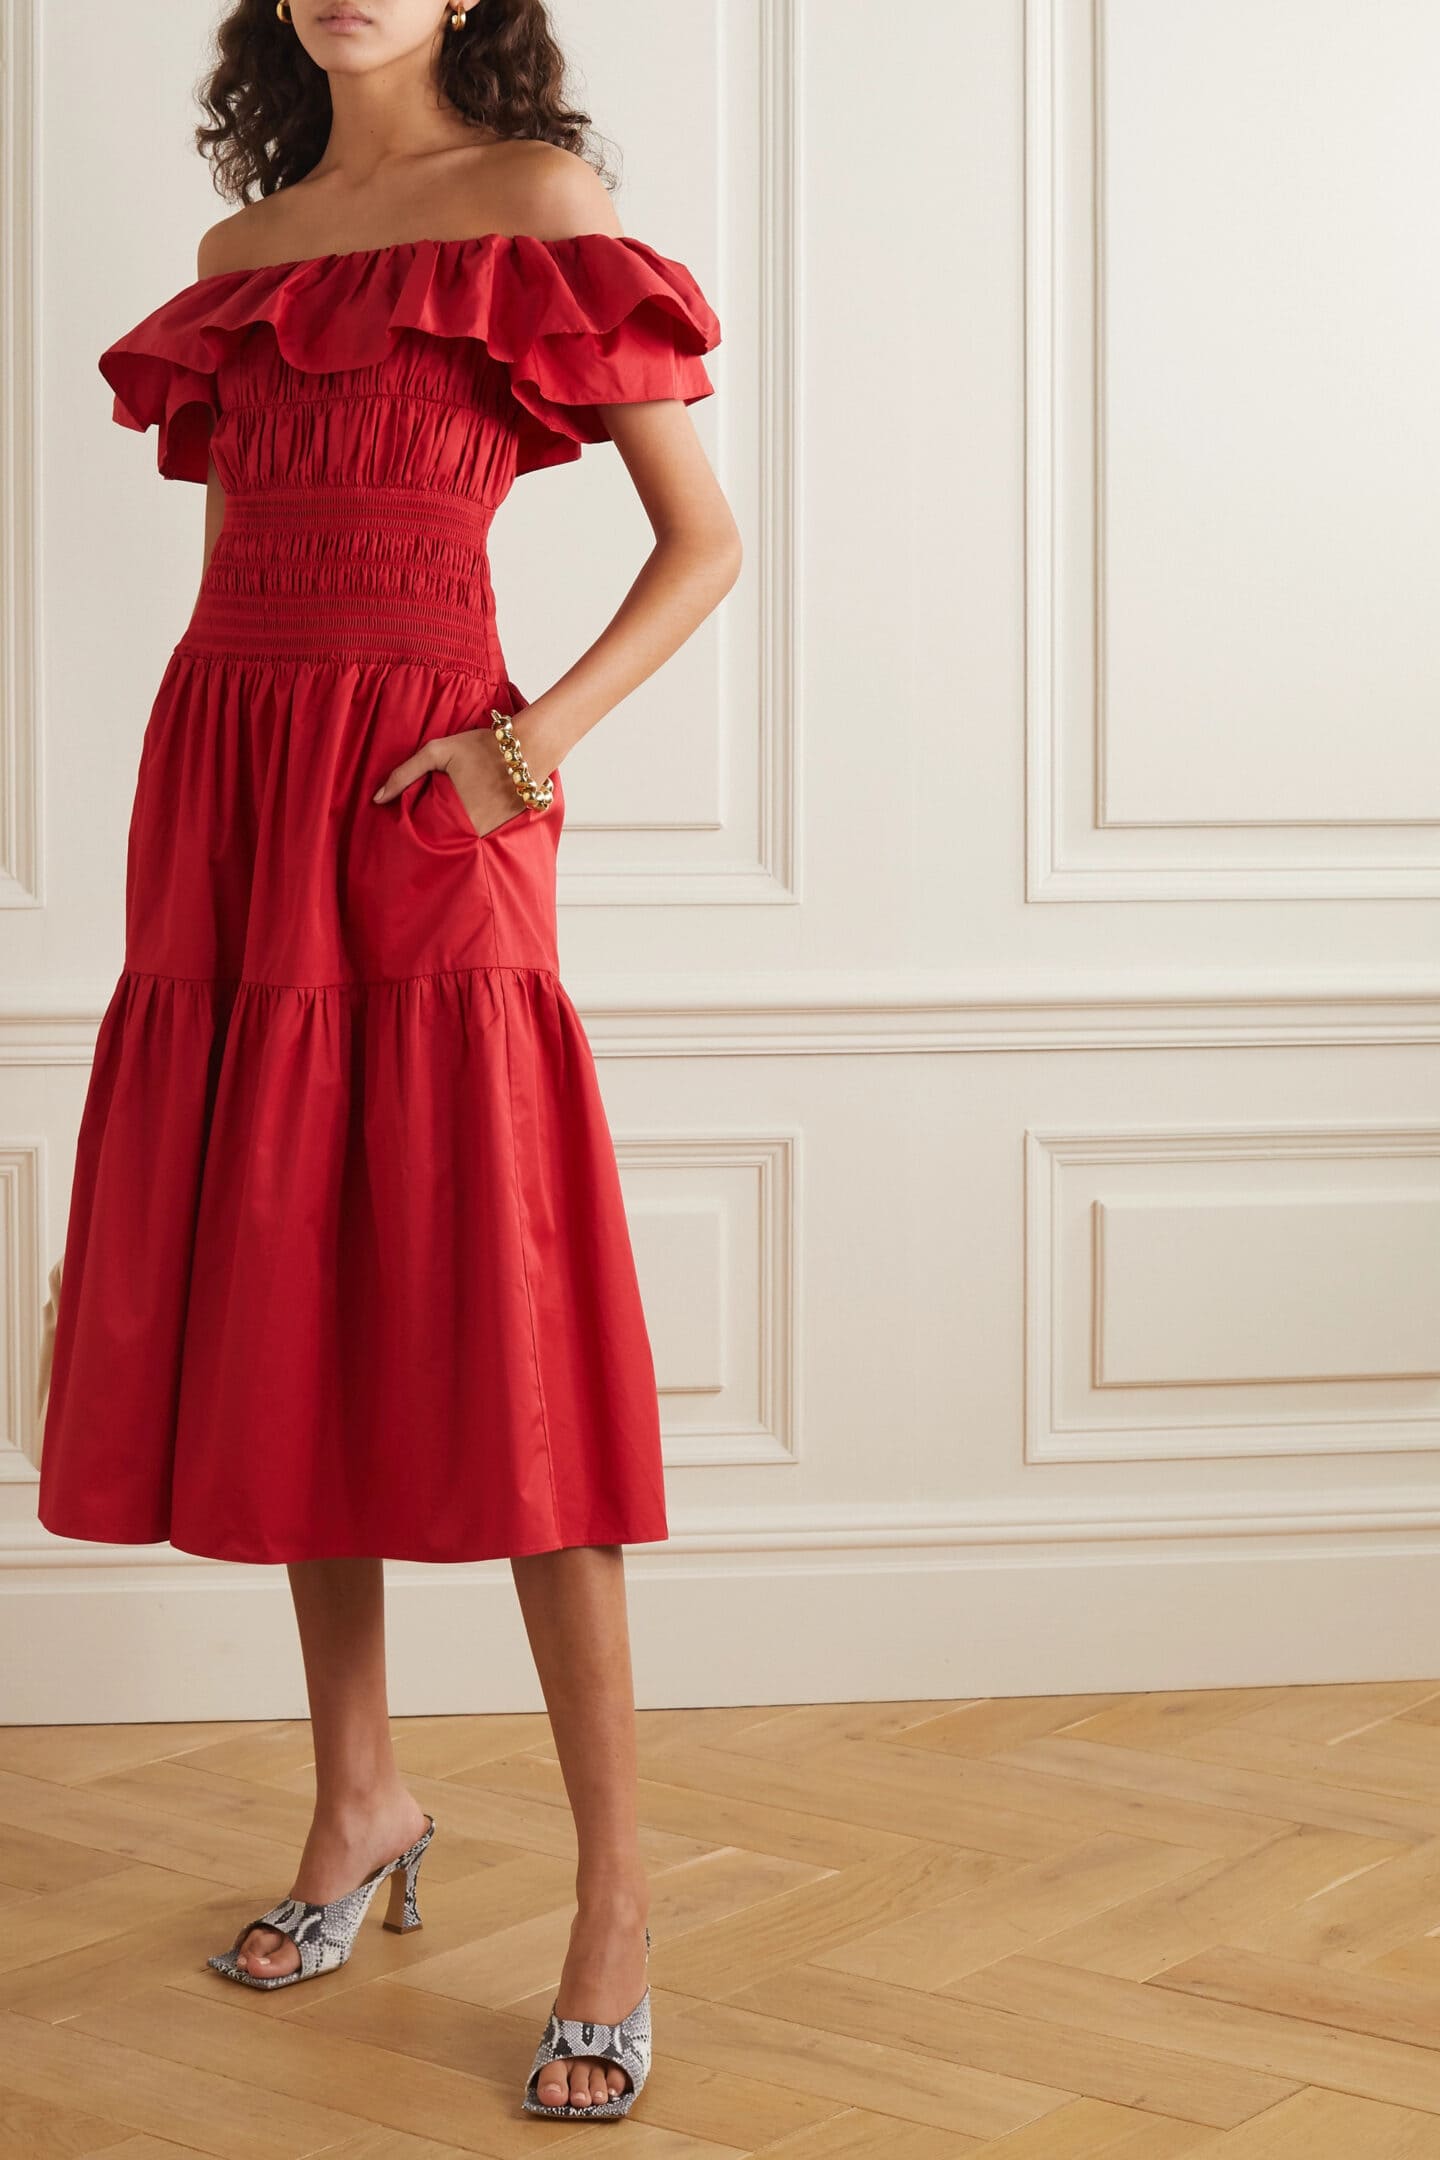 fashion faszination: das rote kleid - rebel in a new dress